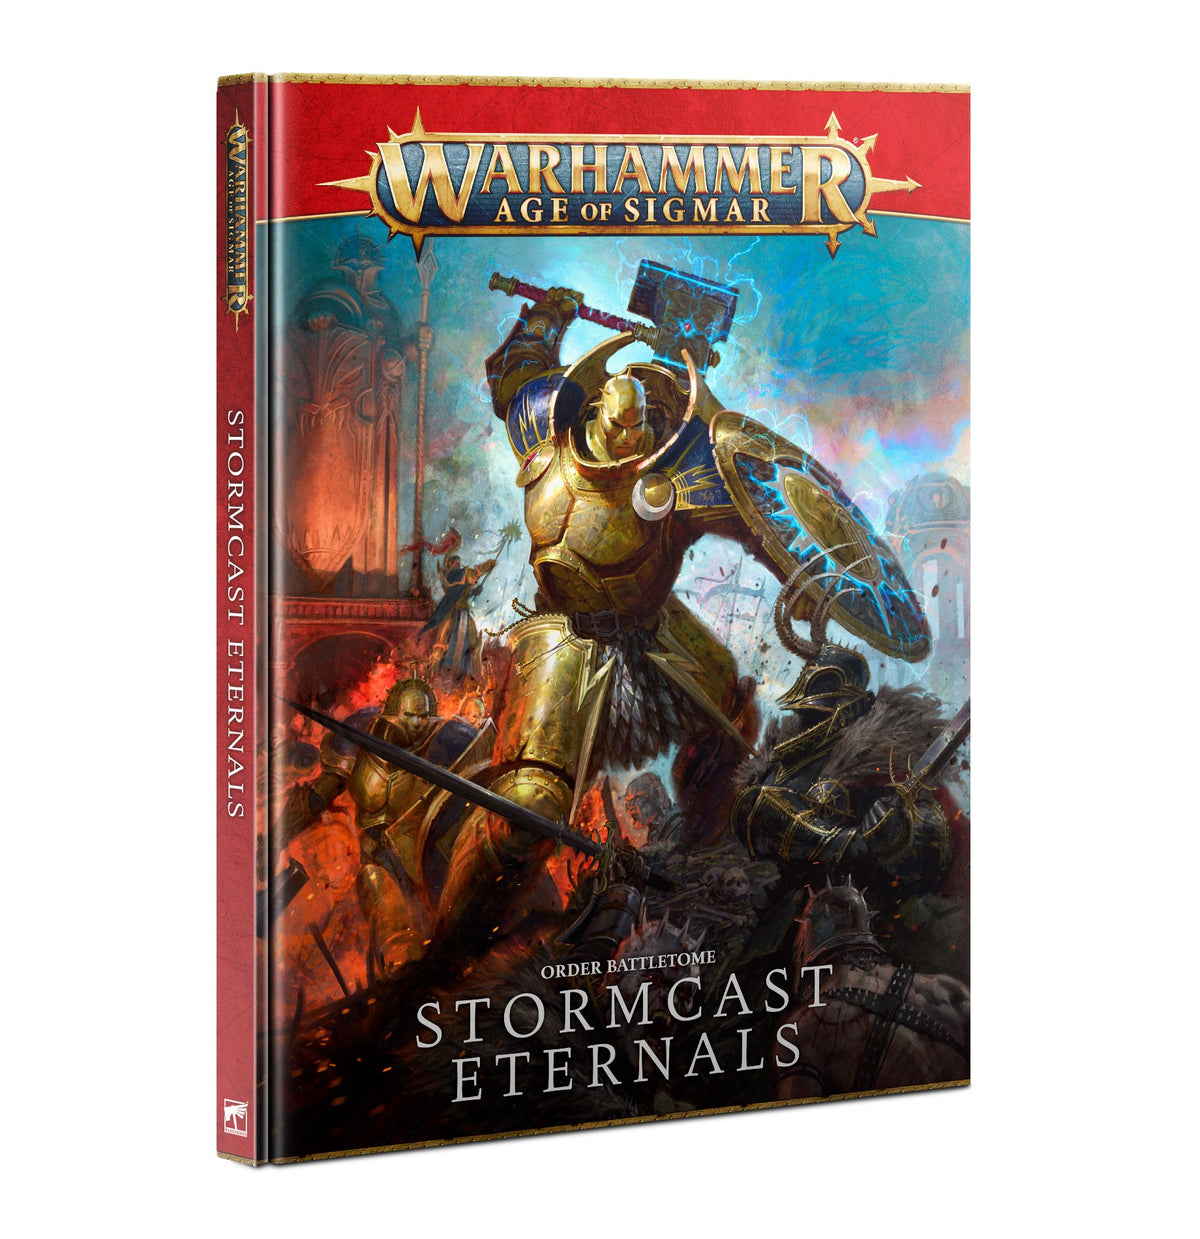 Battletome - Stormcast Eternals (Warhammer Age of Sigmar)